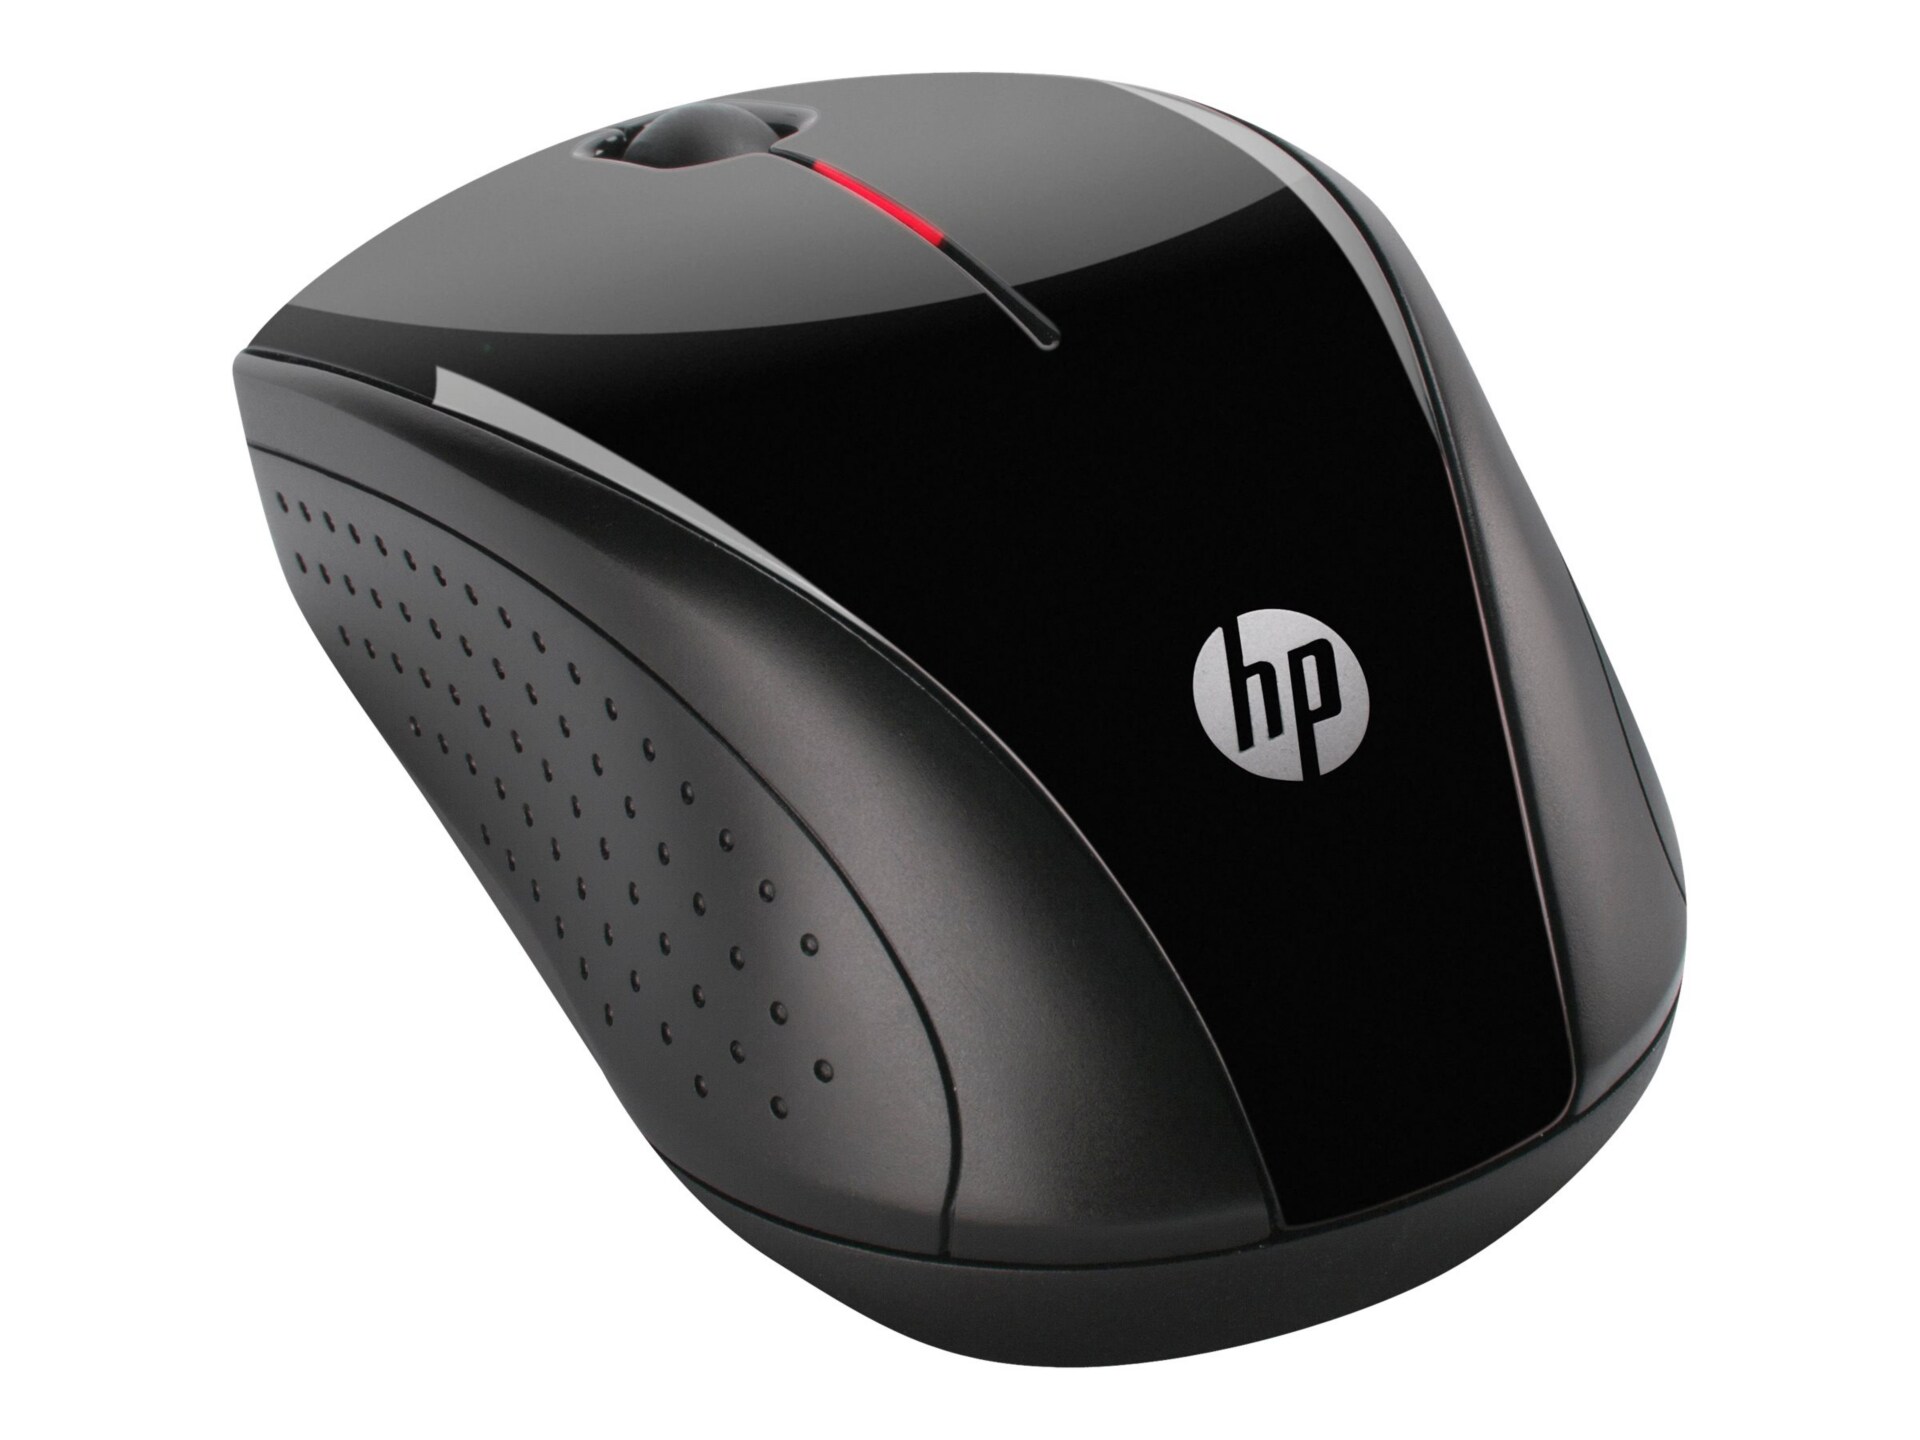 HP X3000 - mouse - 2.4 GHz - metallic gray, glossy black